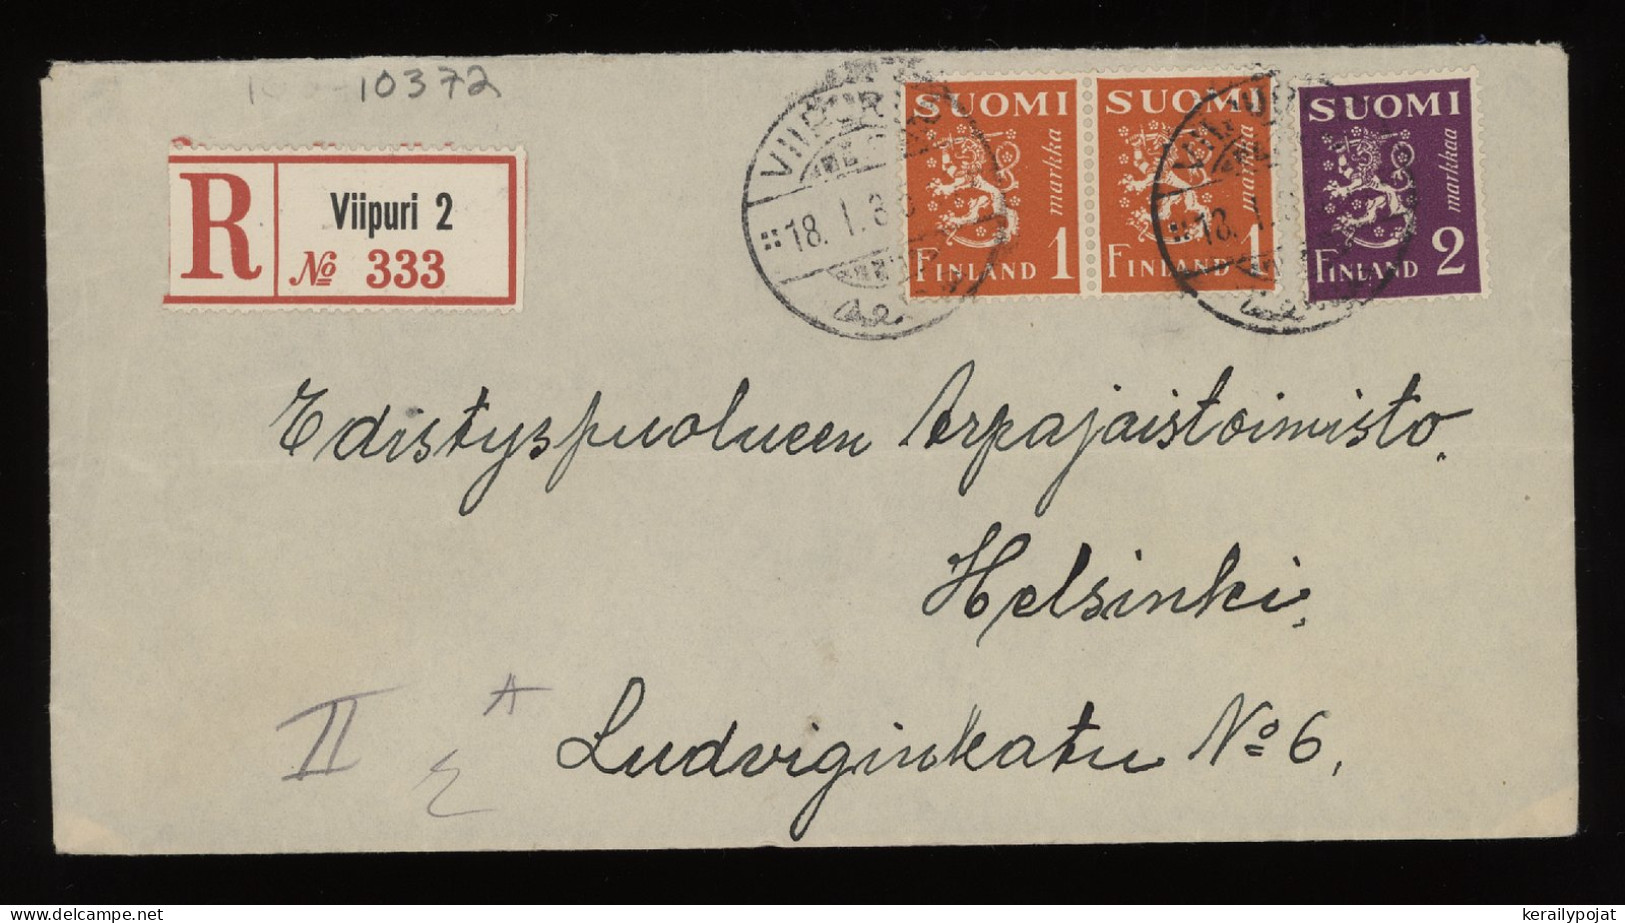 Finland 1935 Viipuri 2 Registered Cover__(10372) - Storia Postale